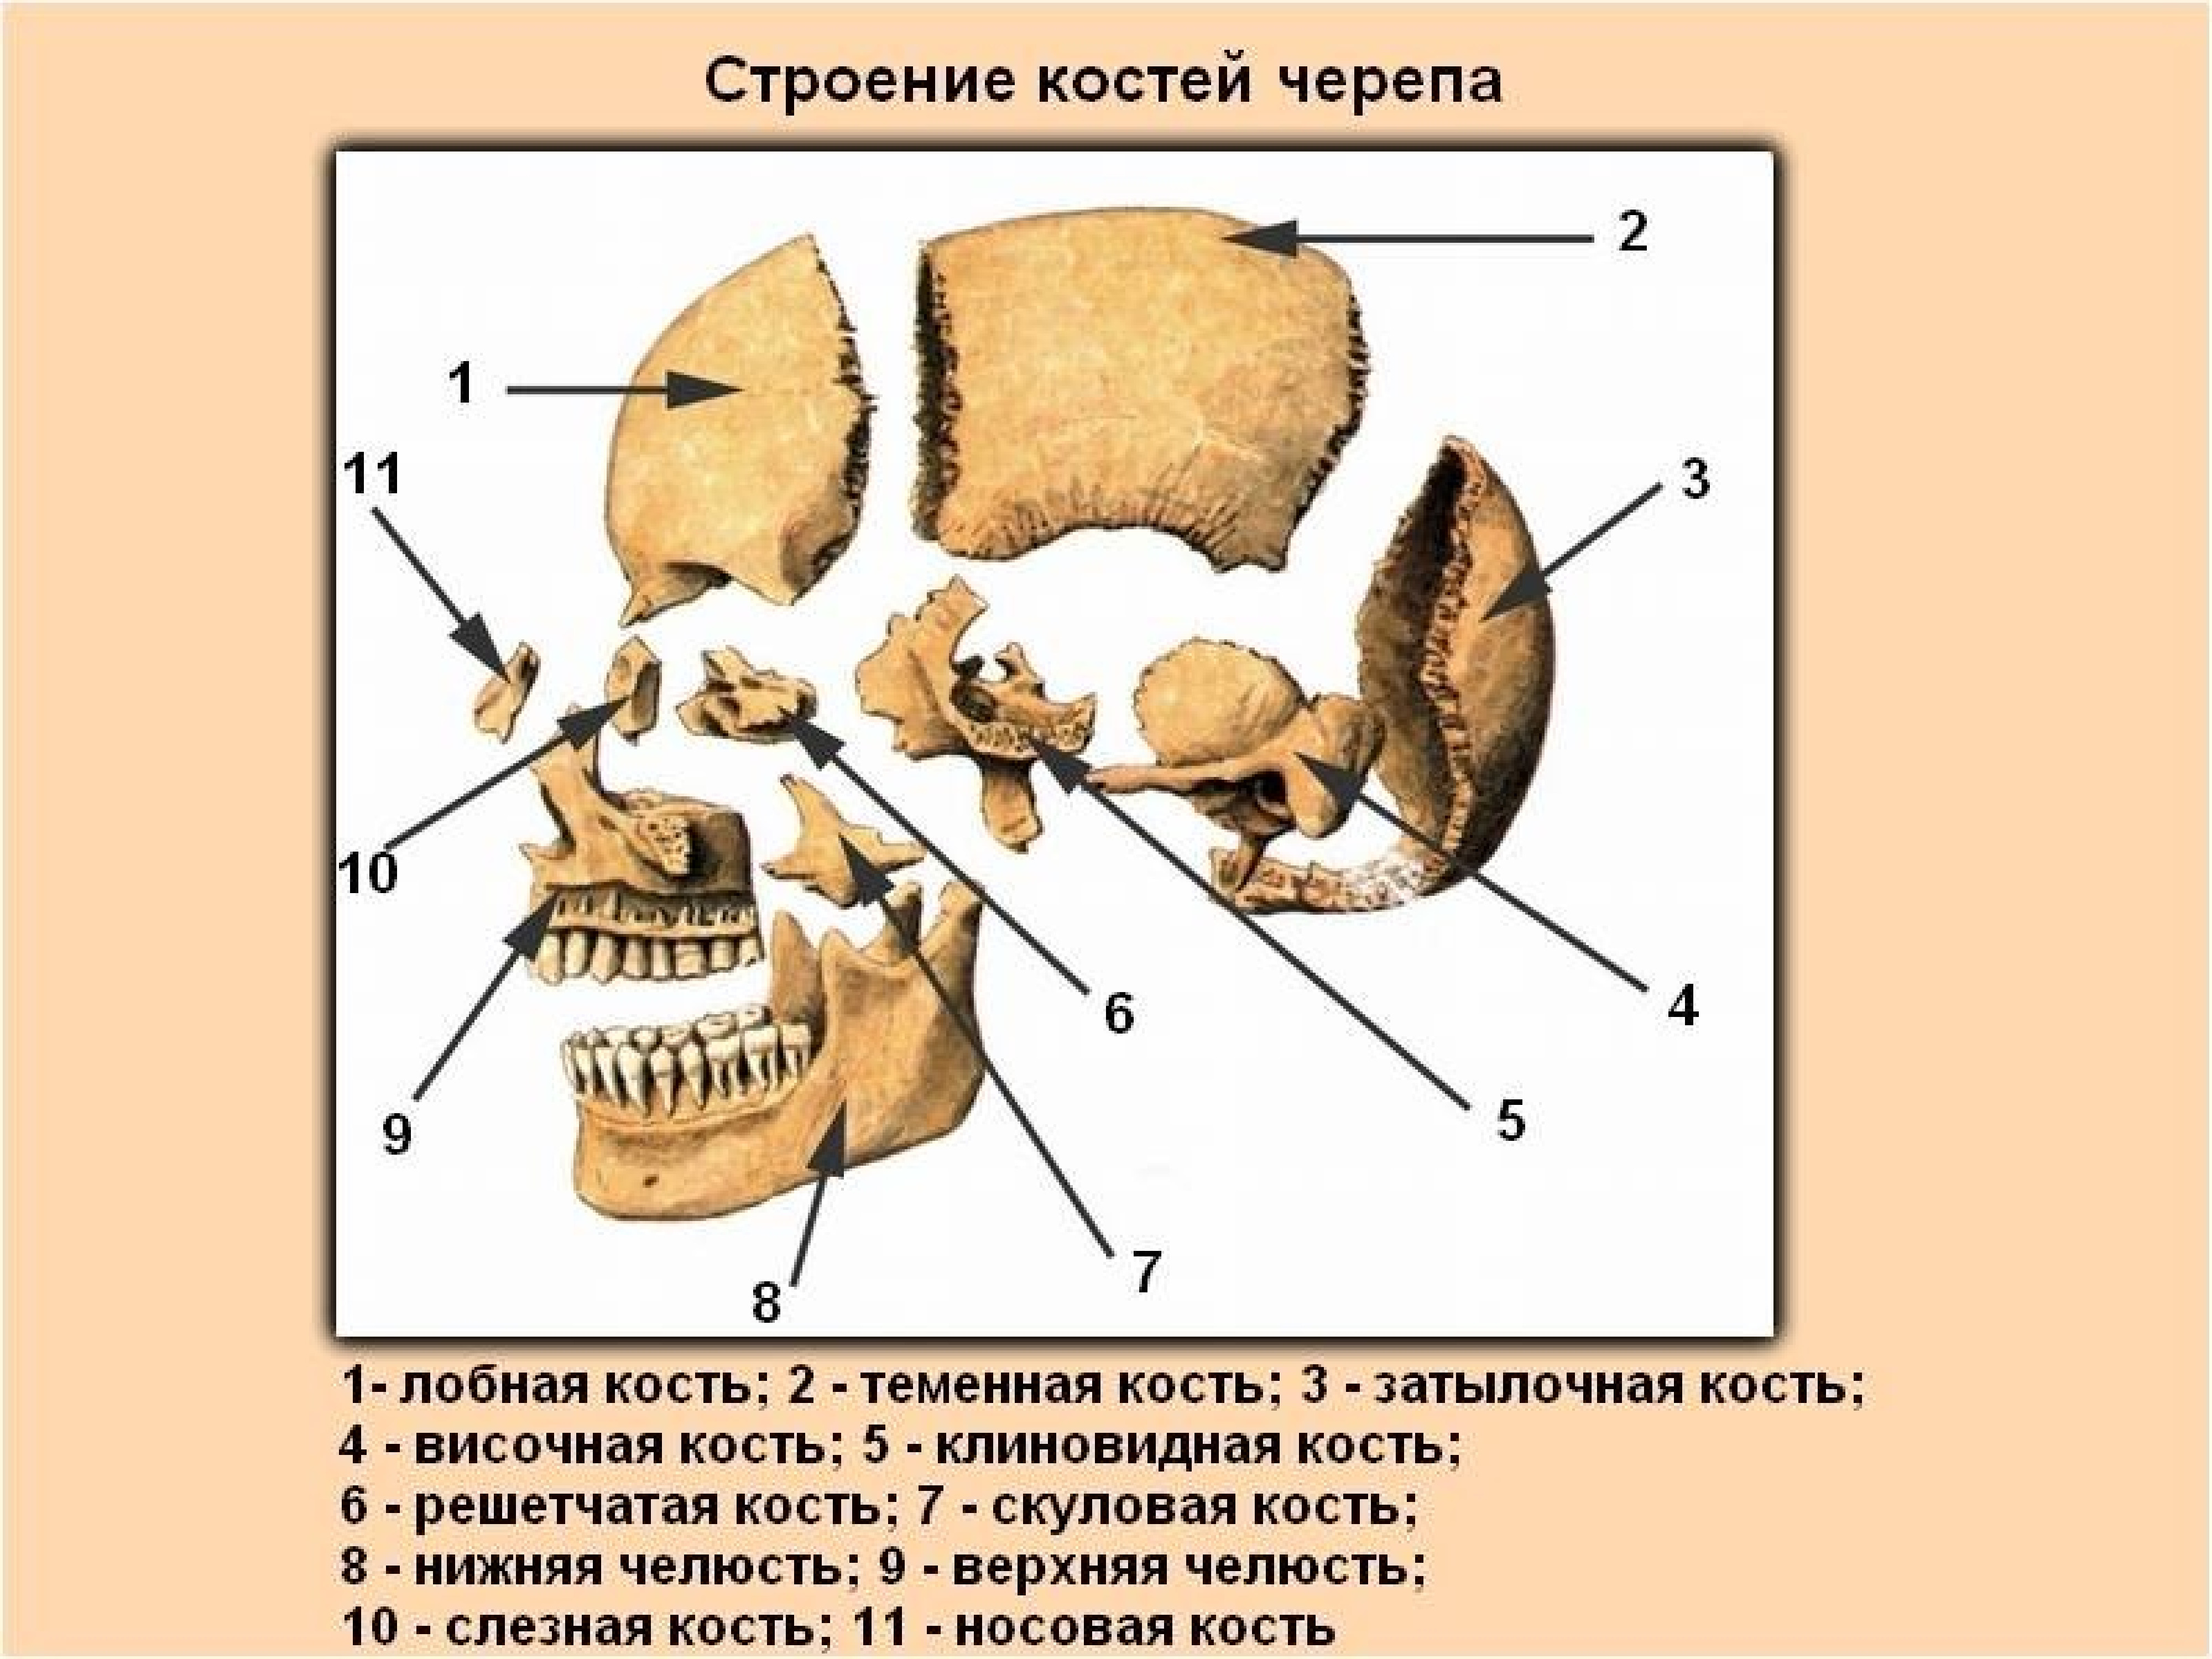 Назови кости черепа. Строение кости черепа человека. Строение костей черепа человека анатомия. Строение костей головы человека. Череп человека с названием костей.